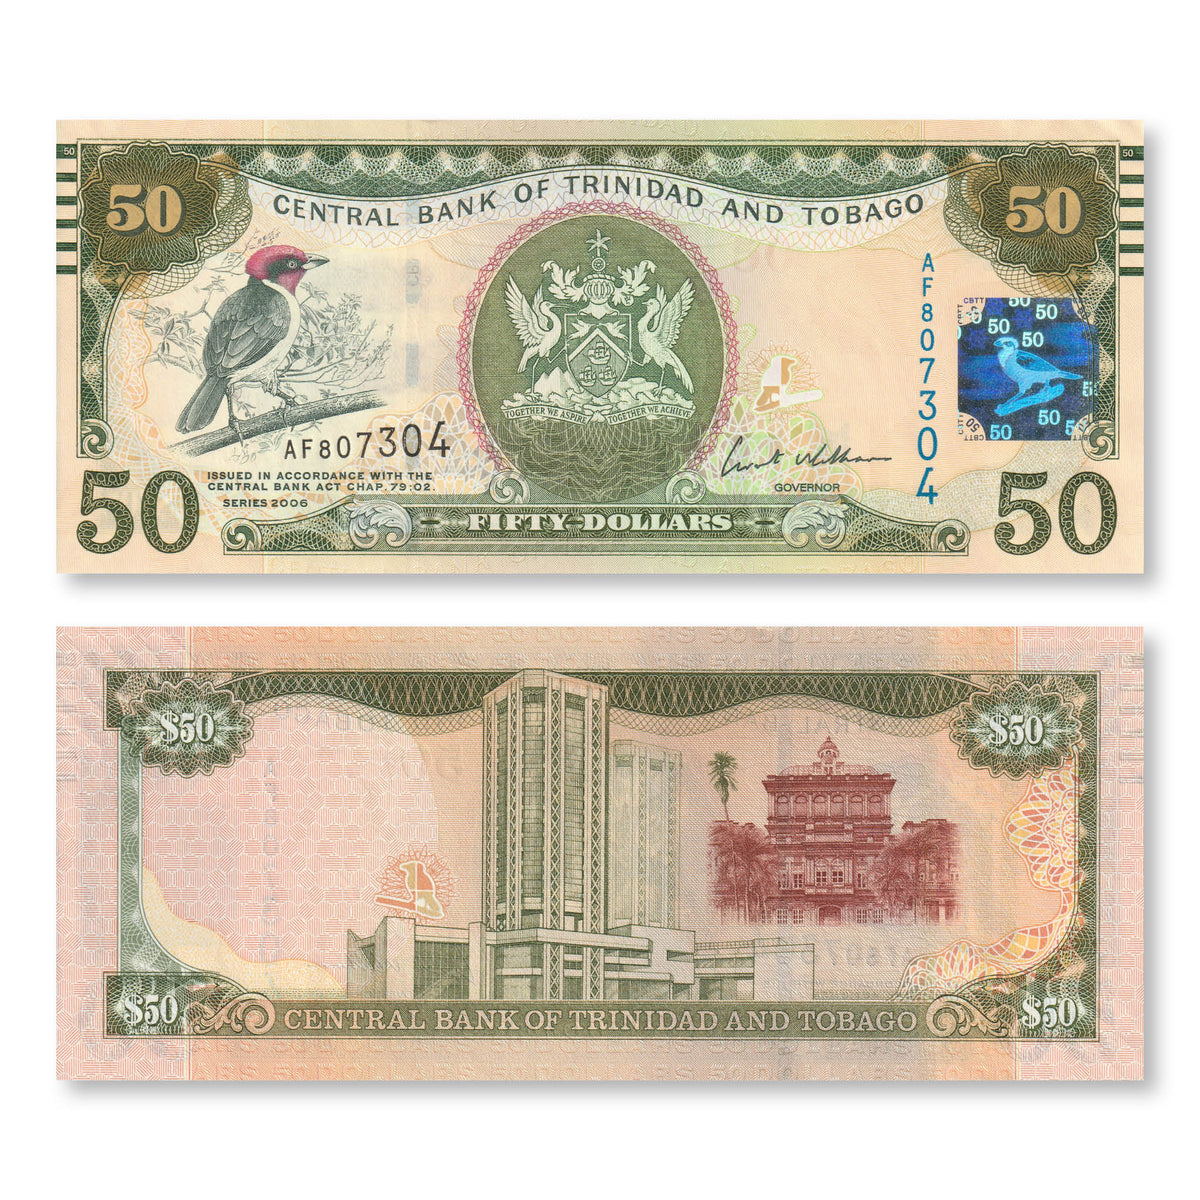 Trinidad & Tobago 50 Dollars, 2006 (2012), B232a, P50, UNC - Robert's World Money - World Banknotes